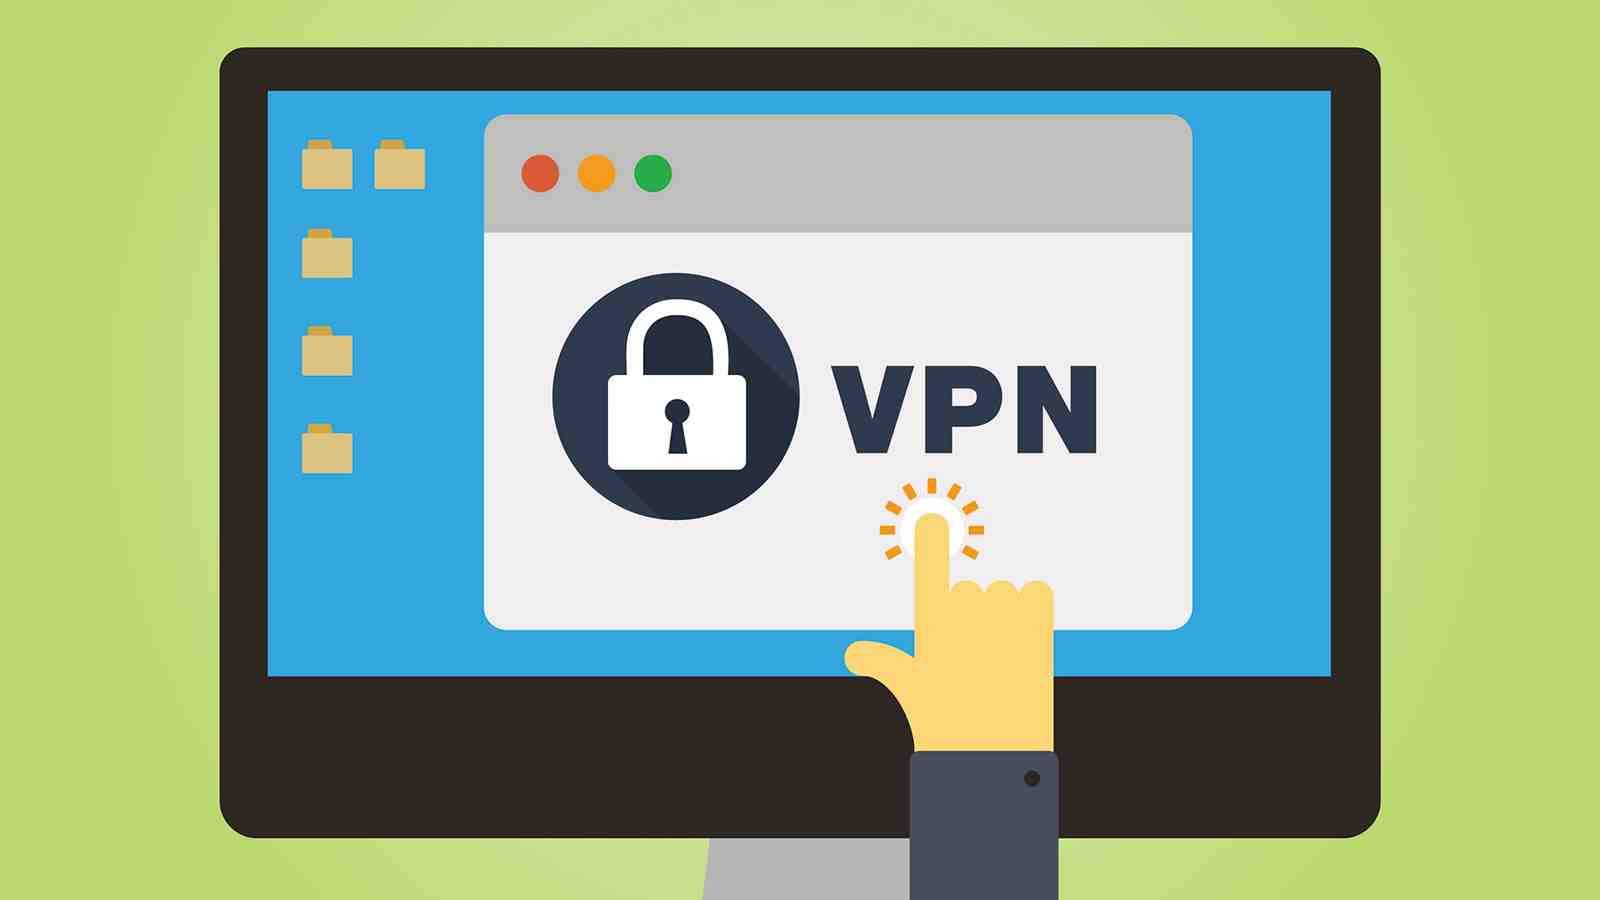 Who needs a VPN?